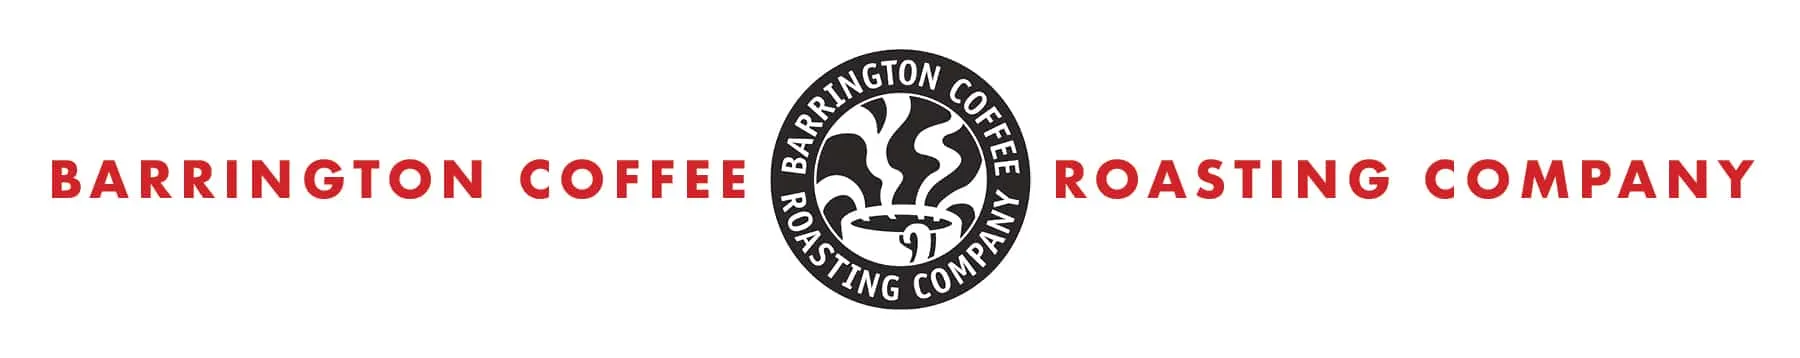 Barrington Coffee